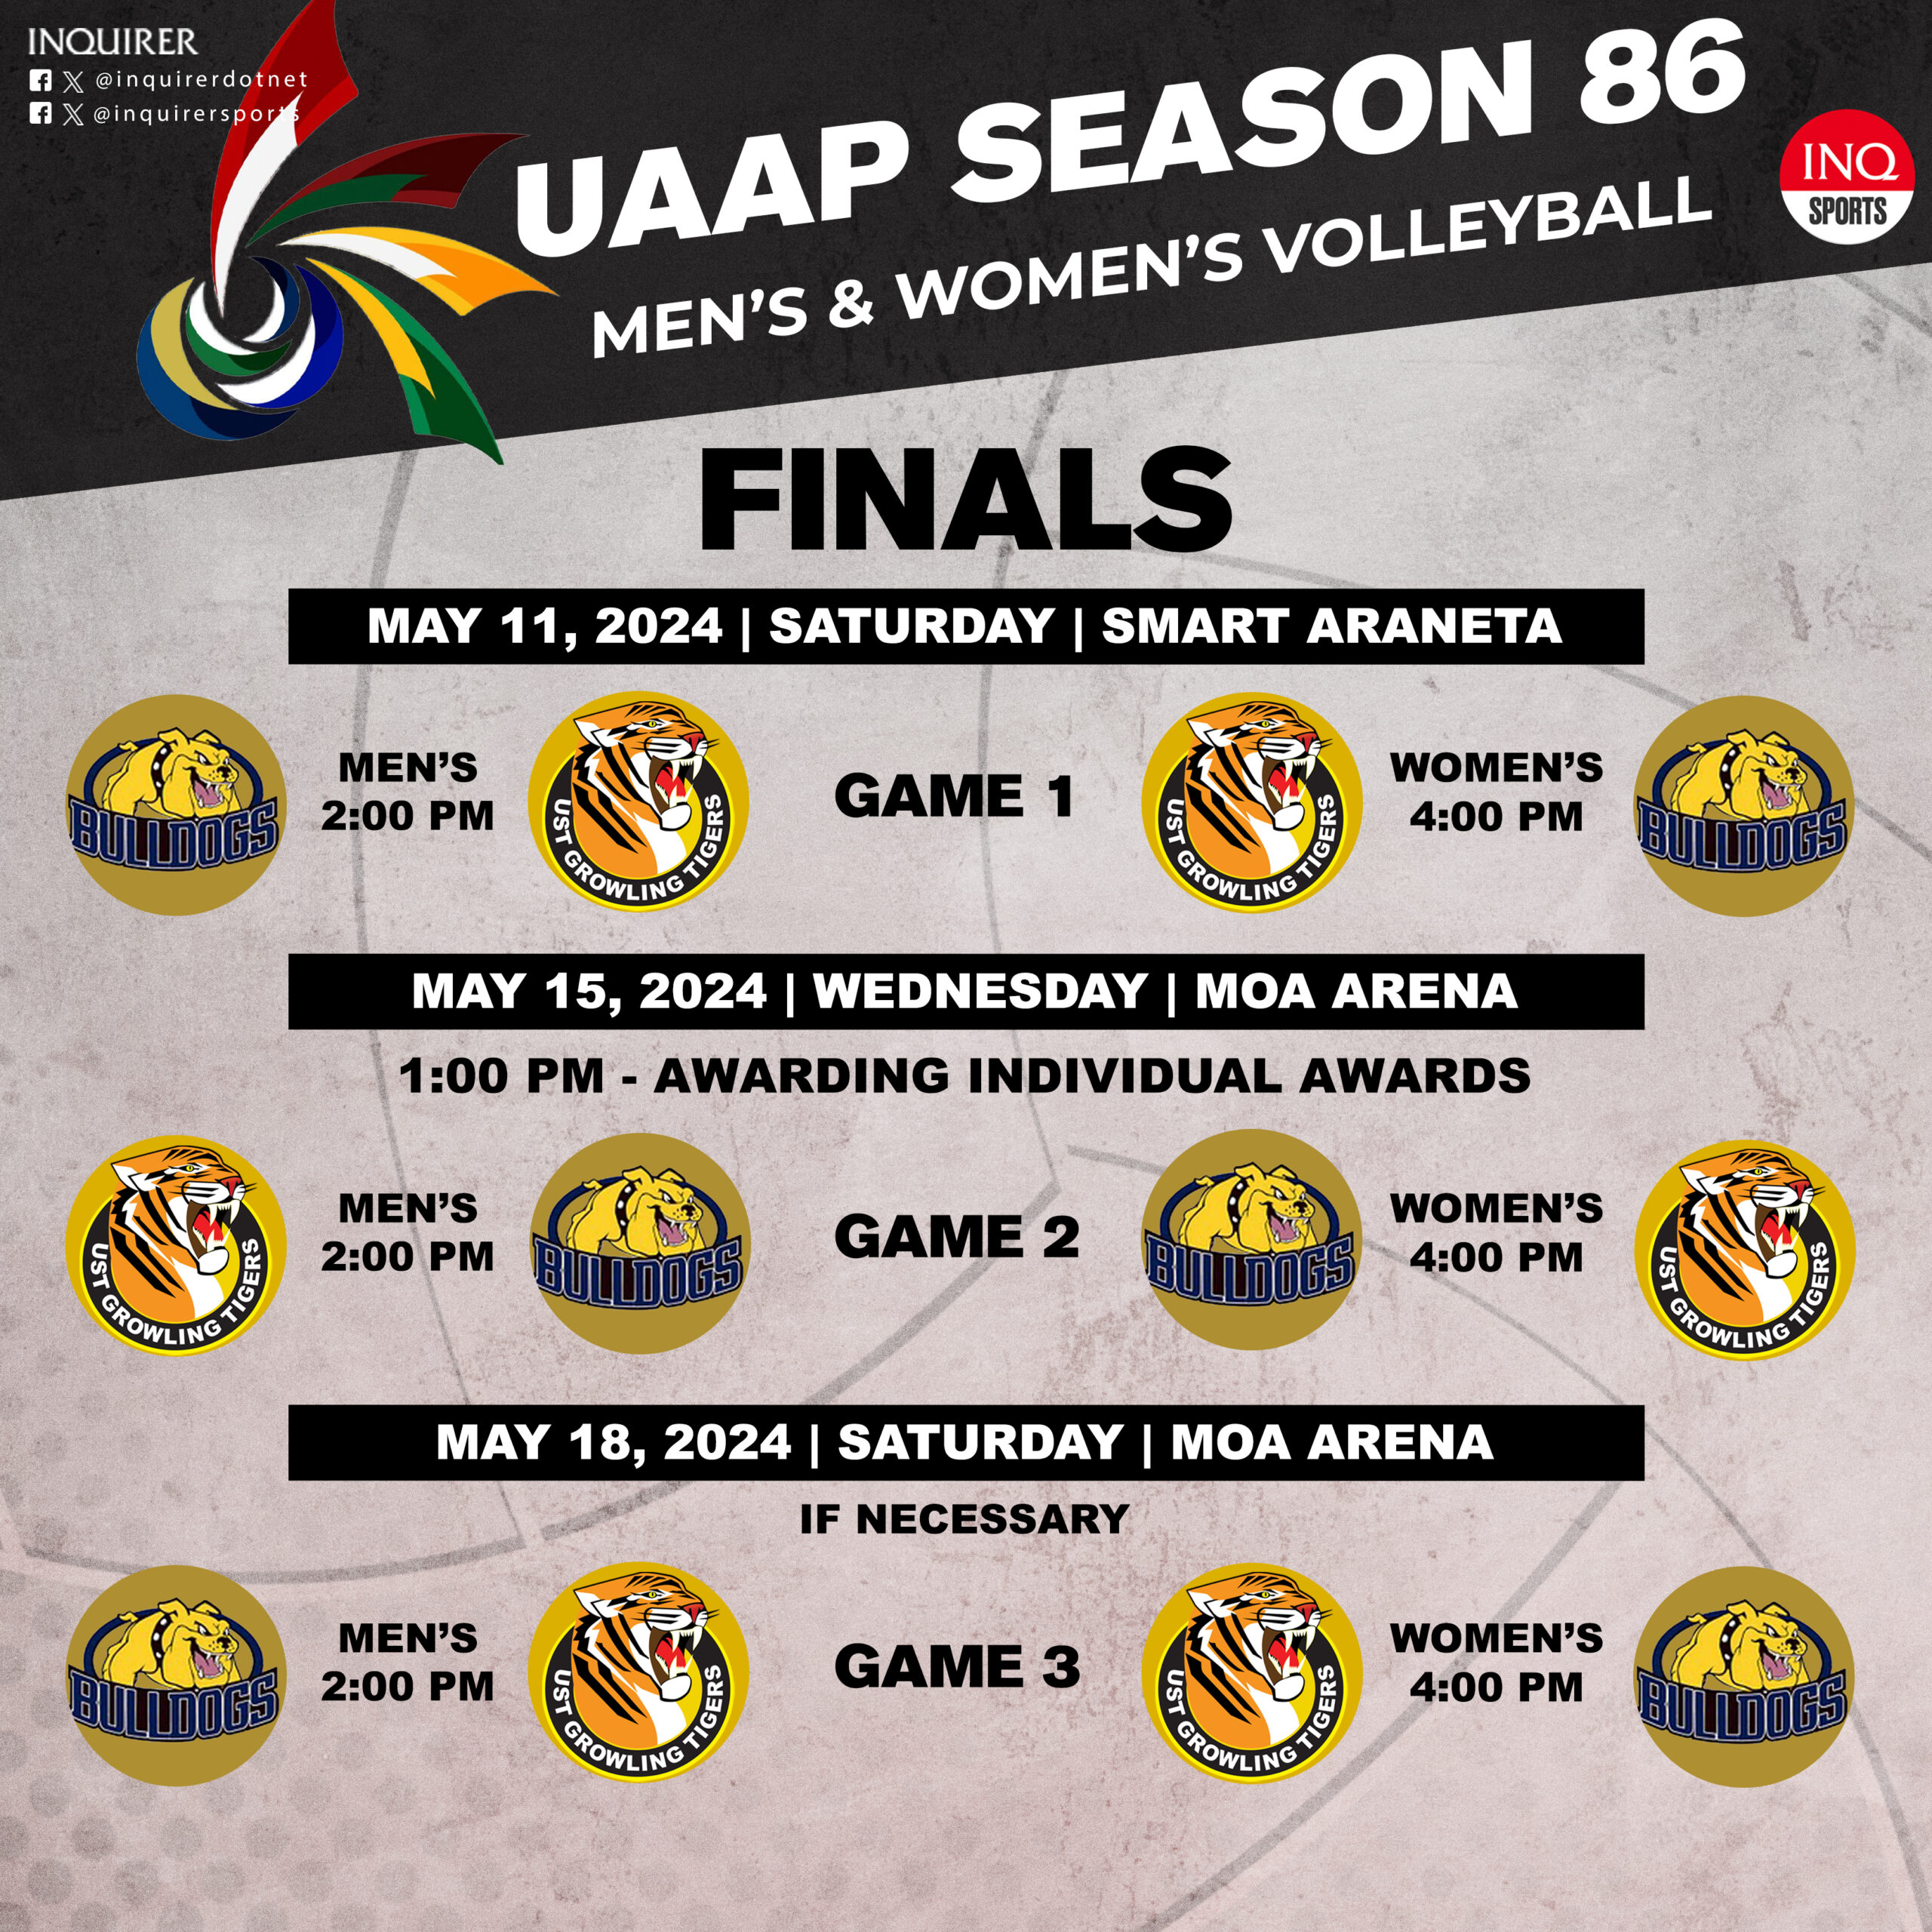 Finals schedule: UAAP Season 86 men's and women's volleyball 